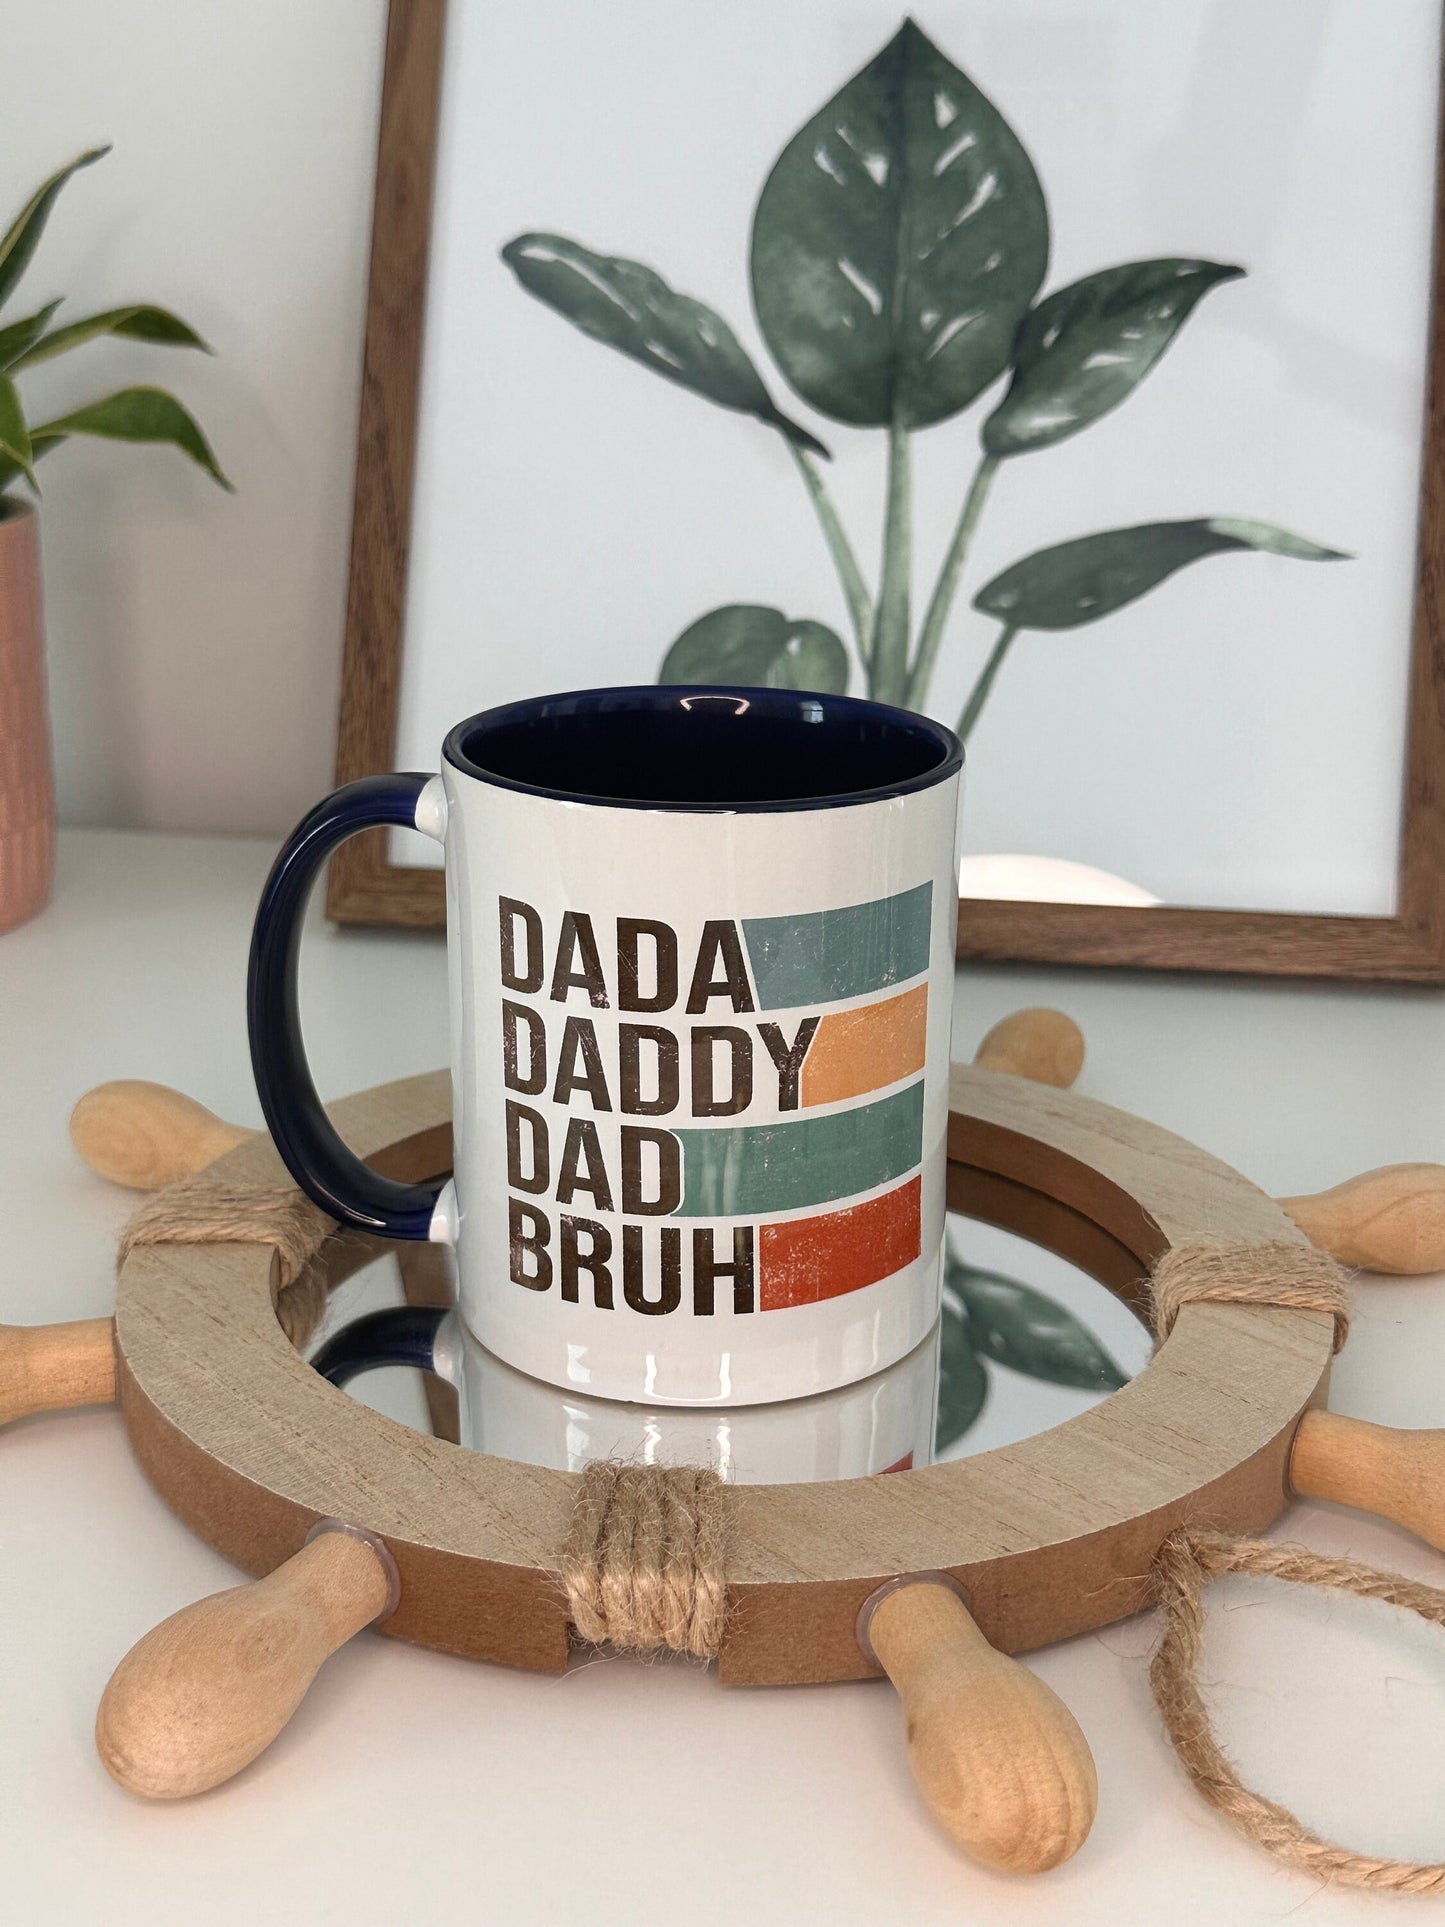 Dad, Daddy, Dad, Bruh Ceramic Mug